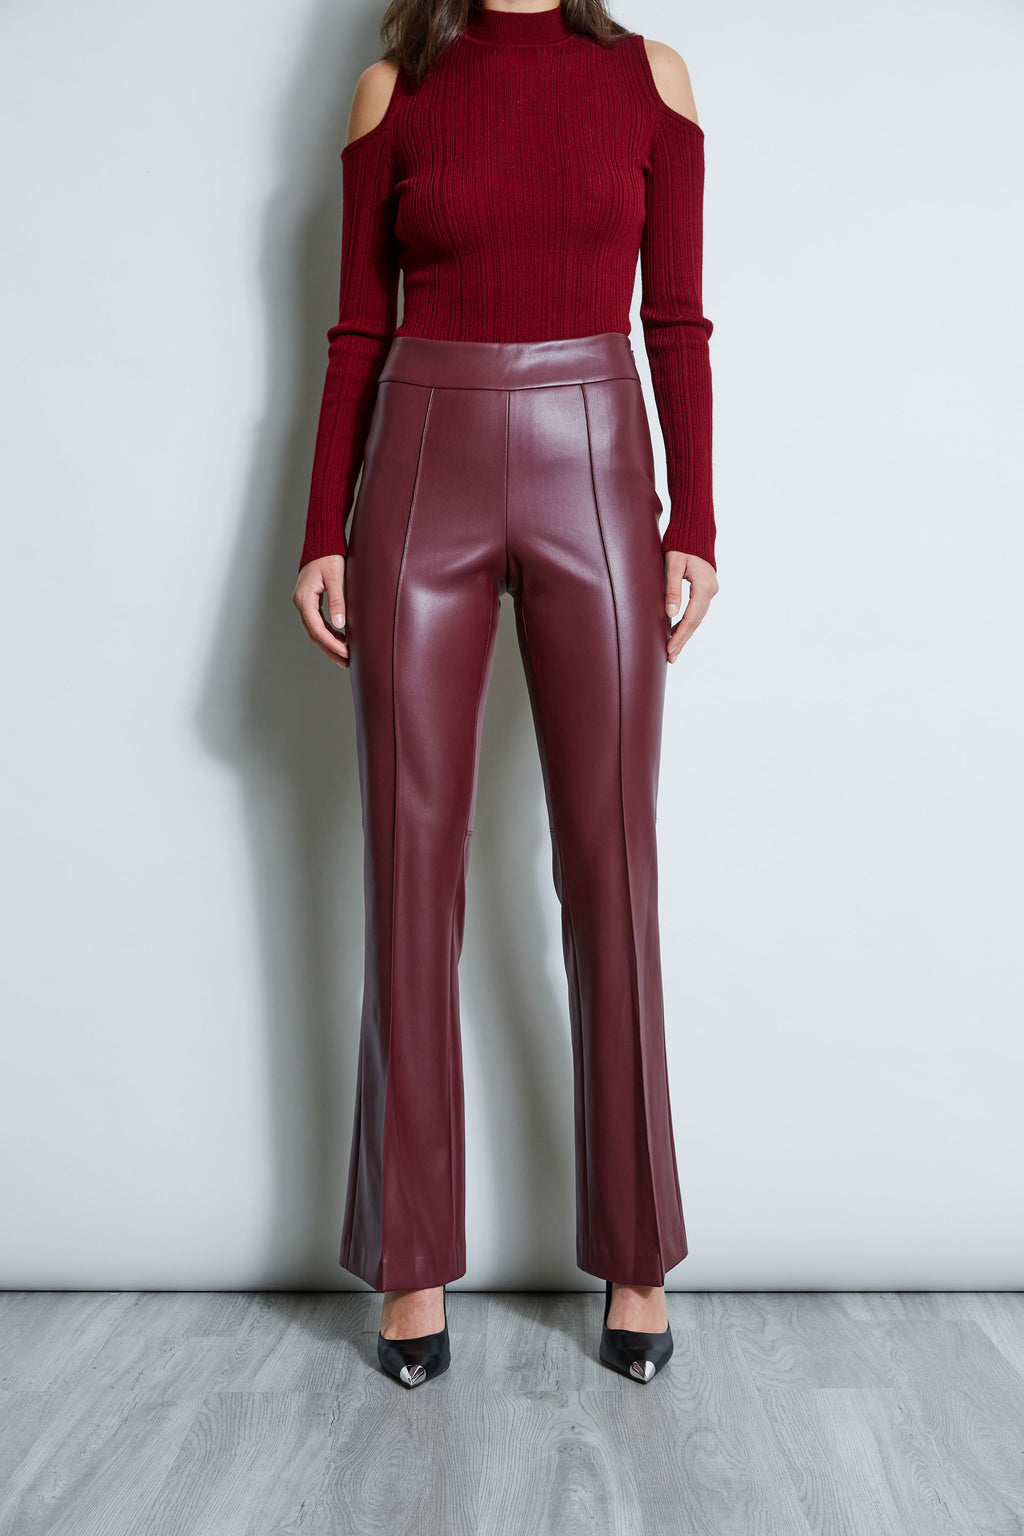 Sleek Burgundy Leather Pants  Red leather pants, Burgundy pants outfit,  Burgundy outfit